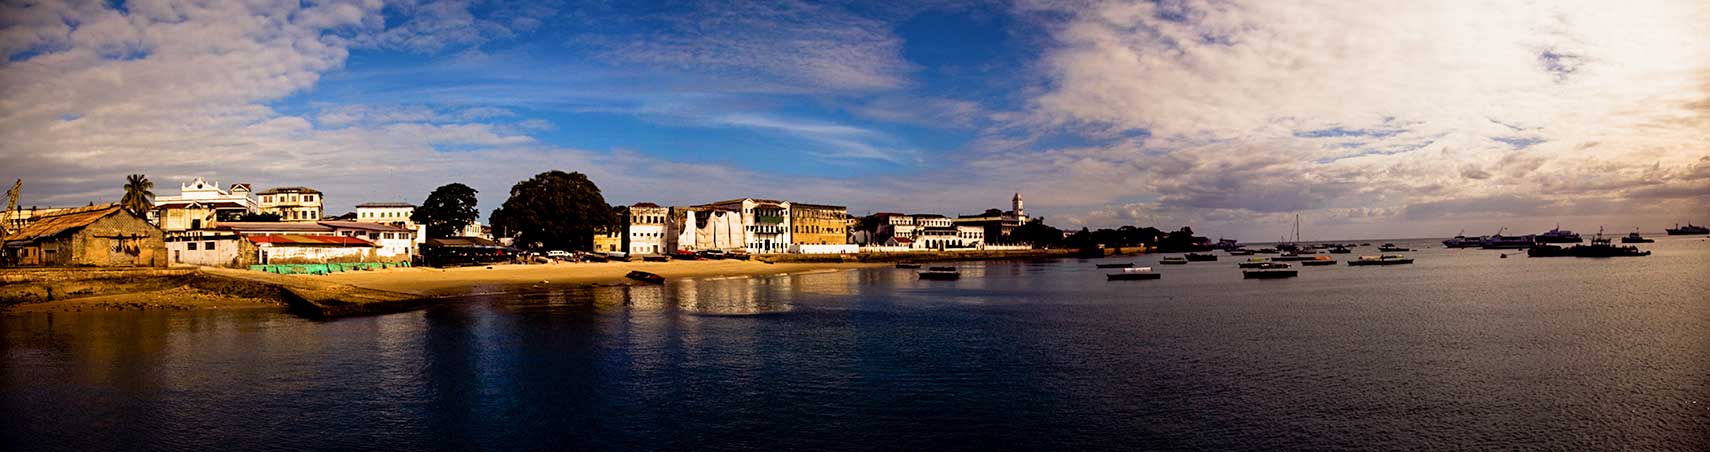 Stone Town waterfront, Zanzibar, Tanzania